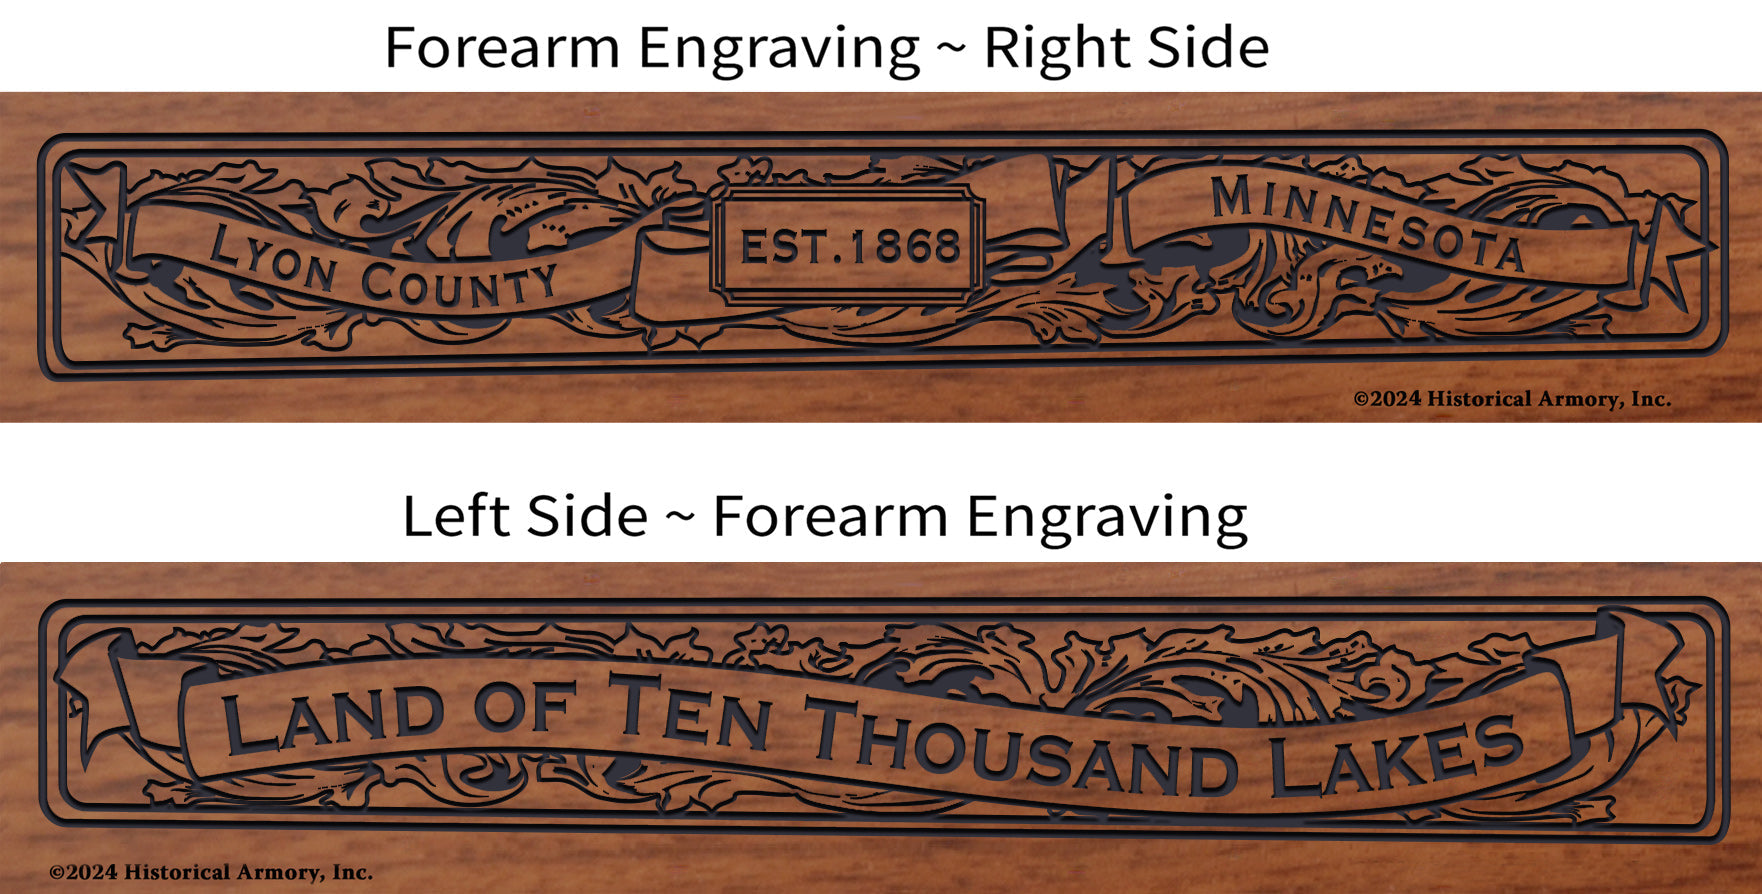 Lyon County Minnesota Engraved Rifle Forearm